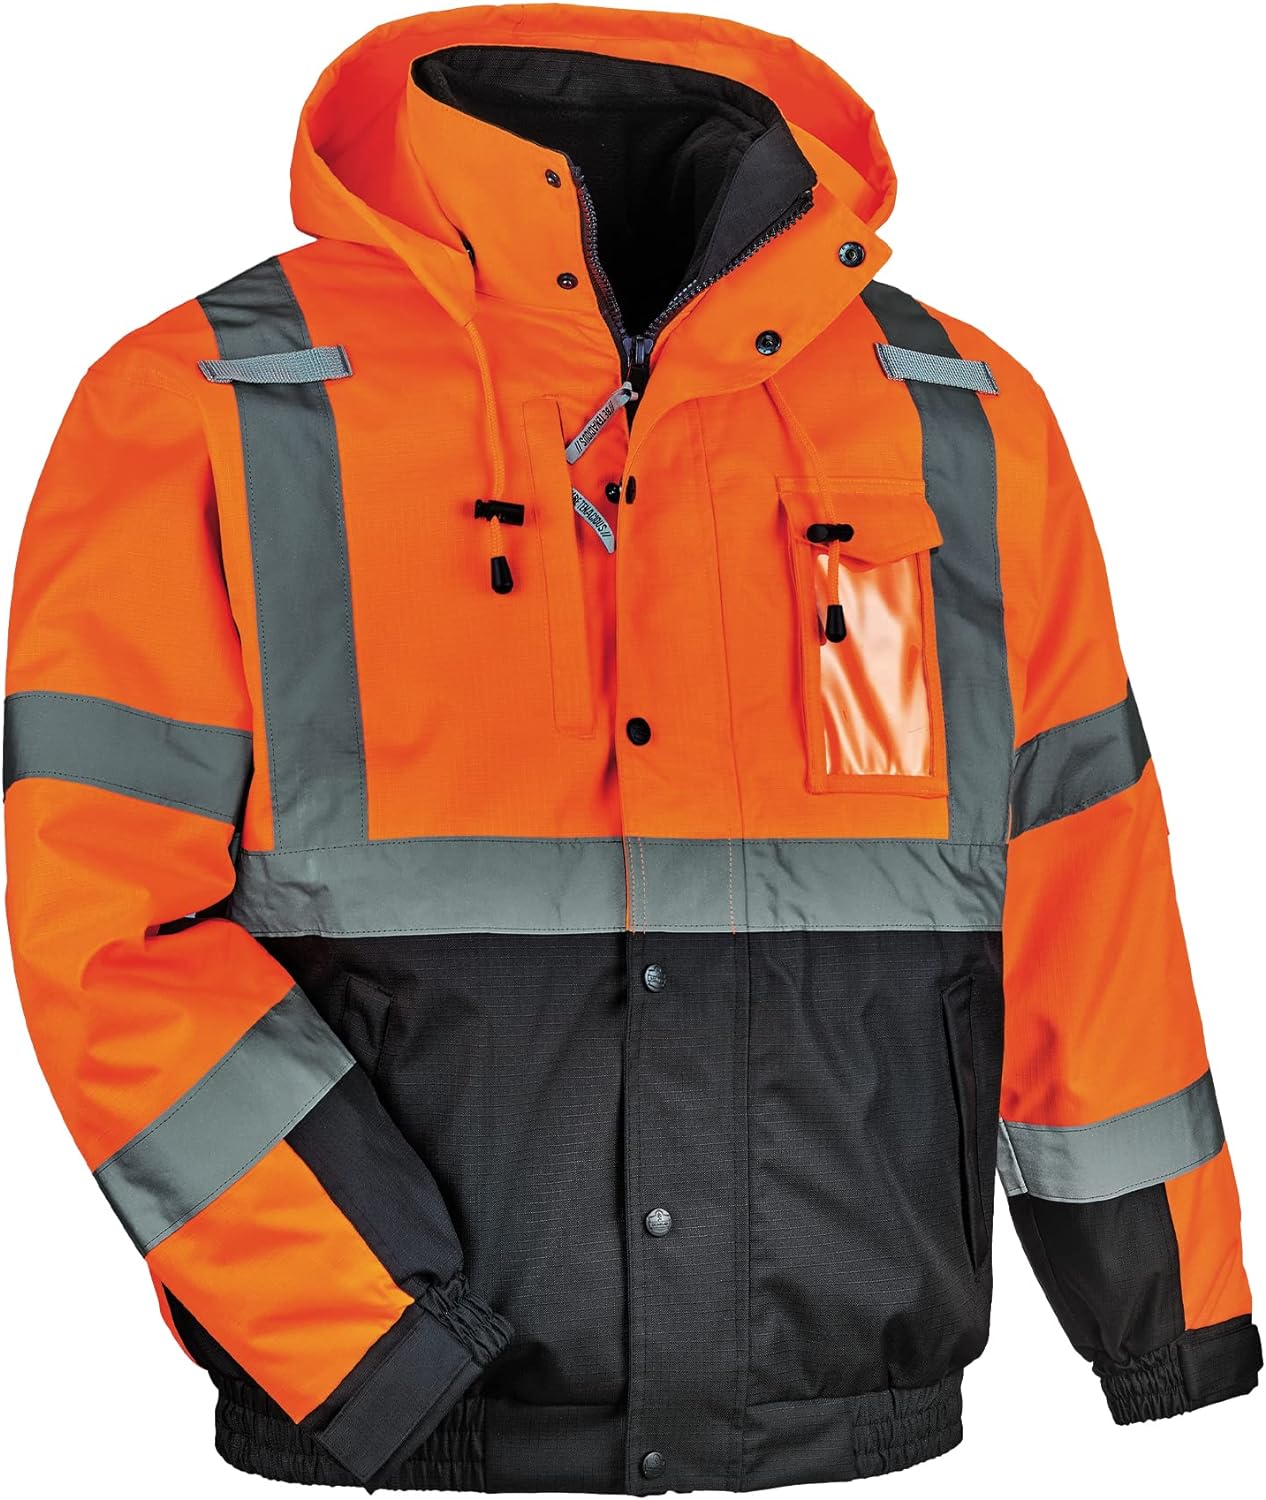 Generic High Visibility Reflective Winter Bomber Jacket, Black Bottom, Zip Out Fleece Liner, ANSI Compliant, Ergodyne GloWear 8381